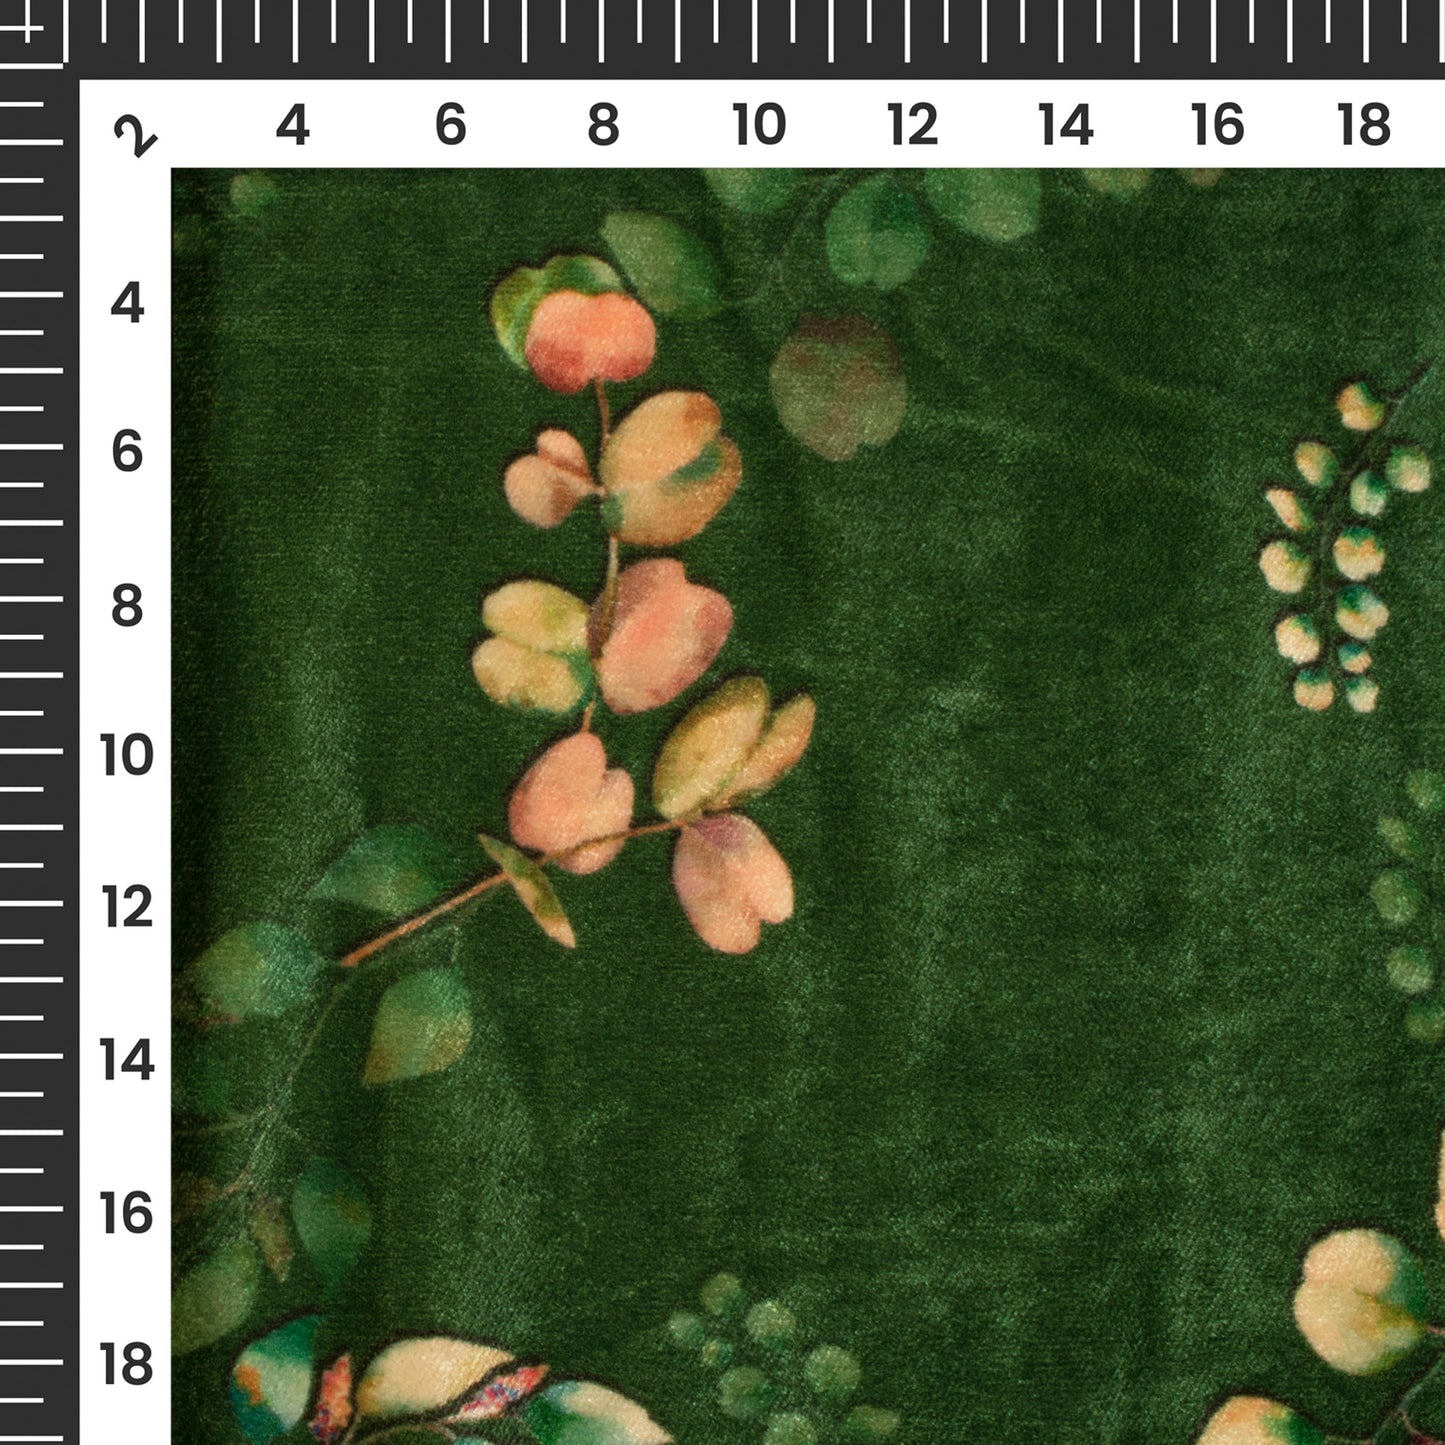 Forest Green Leaf Pattern Digital Print Velvet Fabric